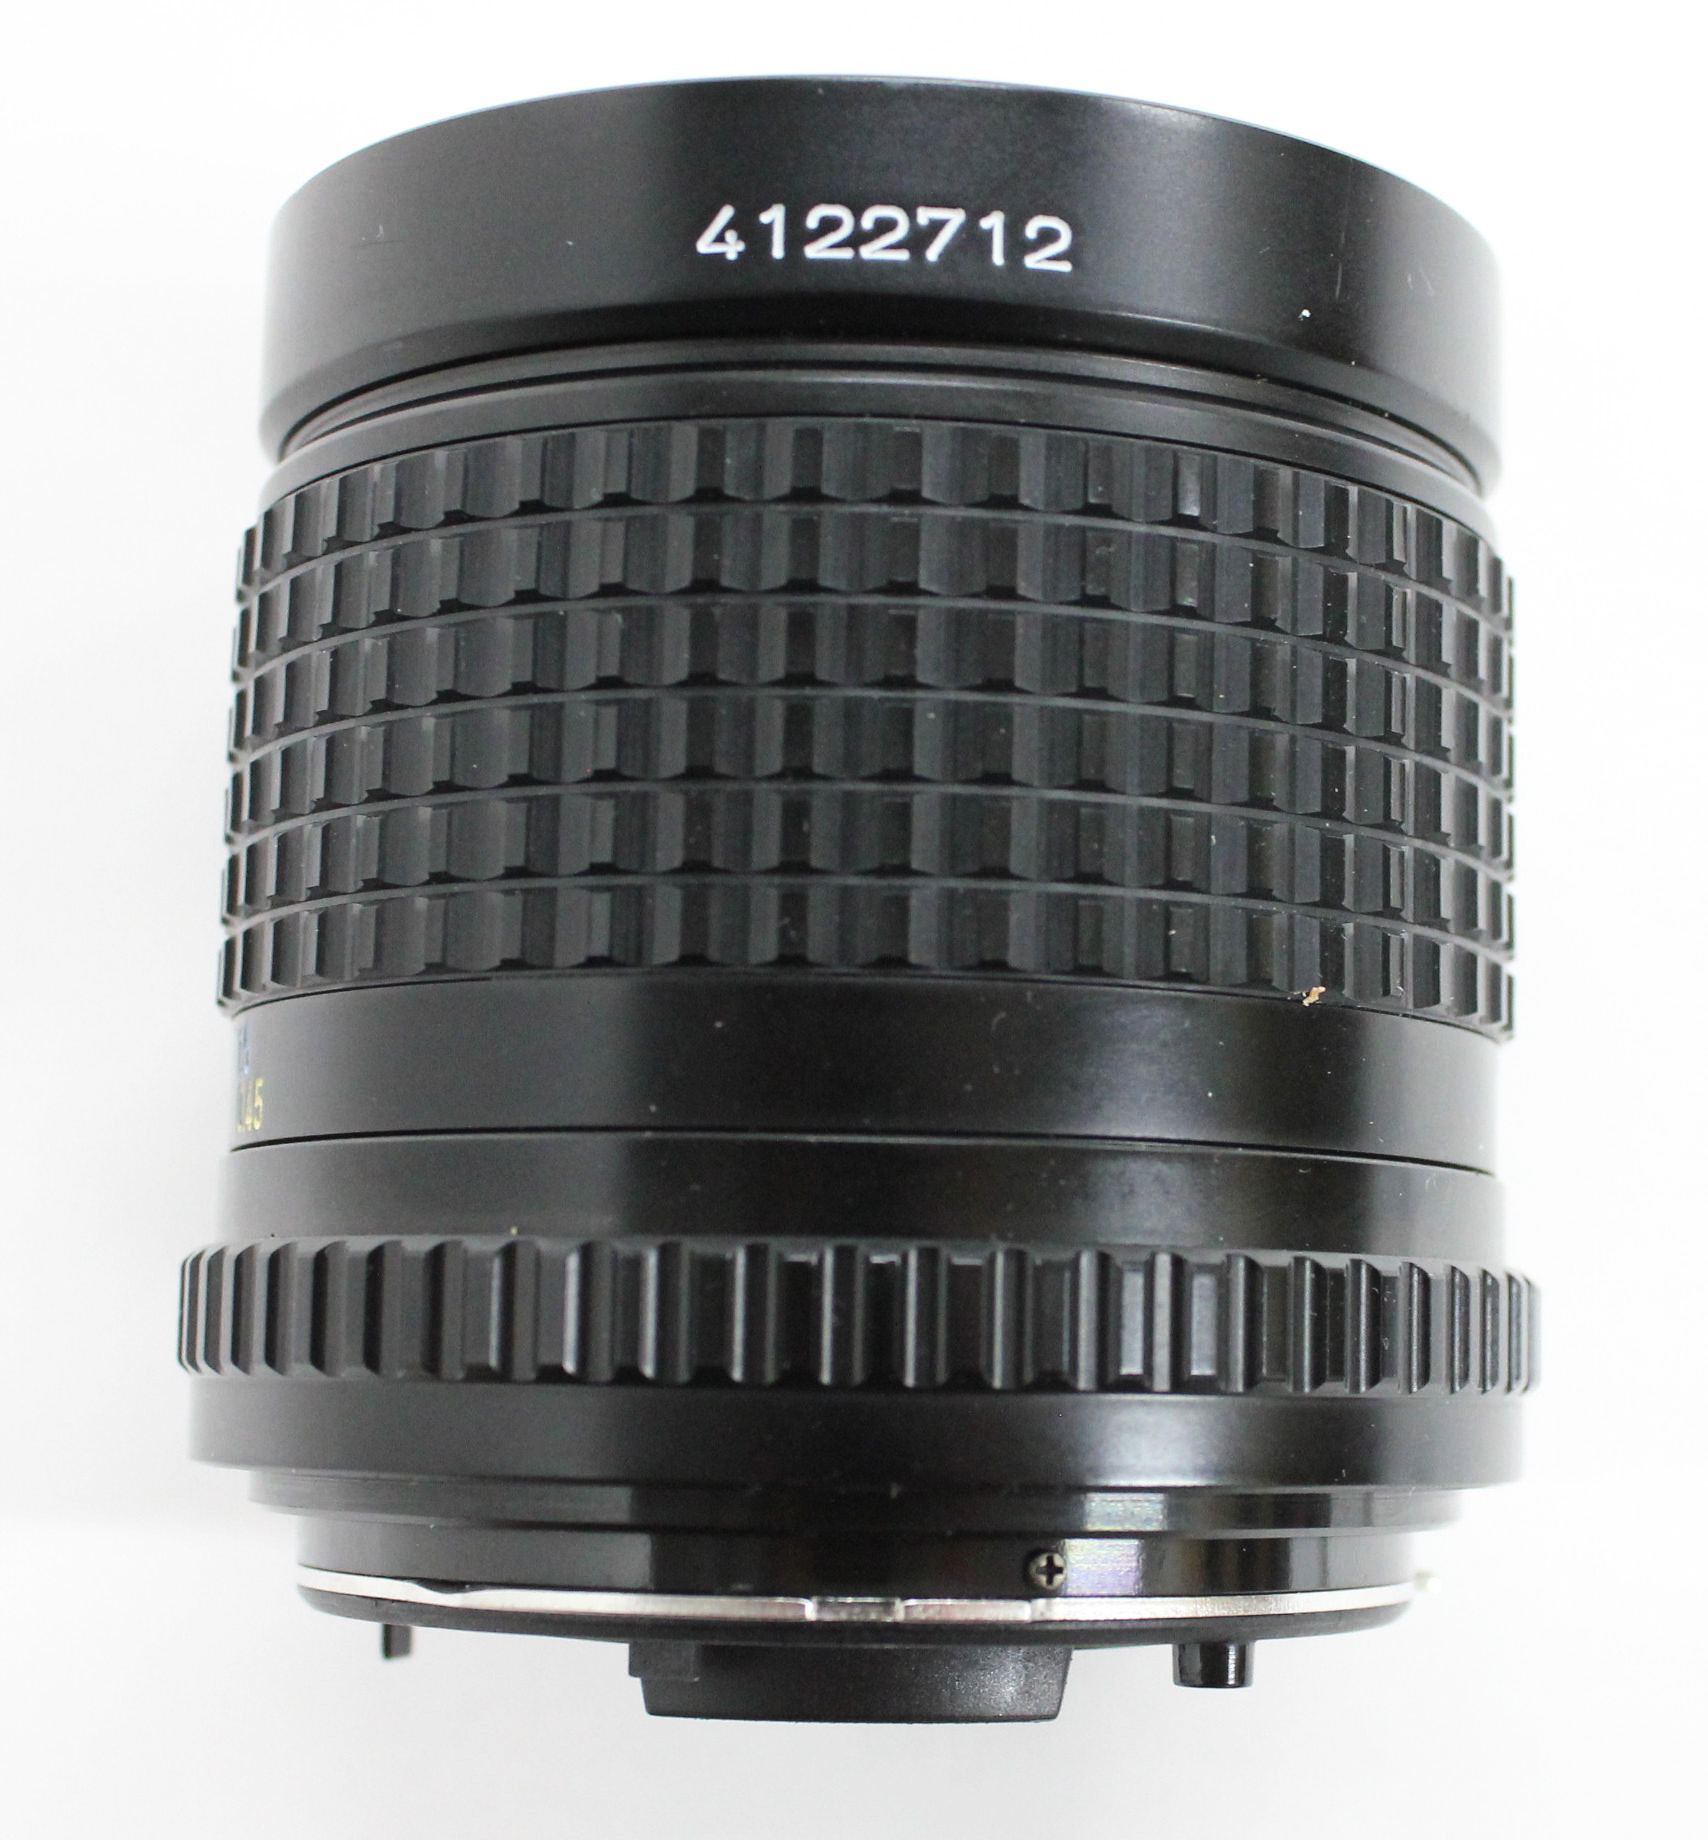  Pentax SMC Pentax-A 645 45mm F/2.8 MF Lens from Japan Photo 3